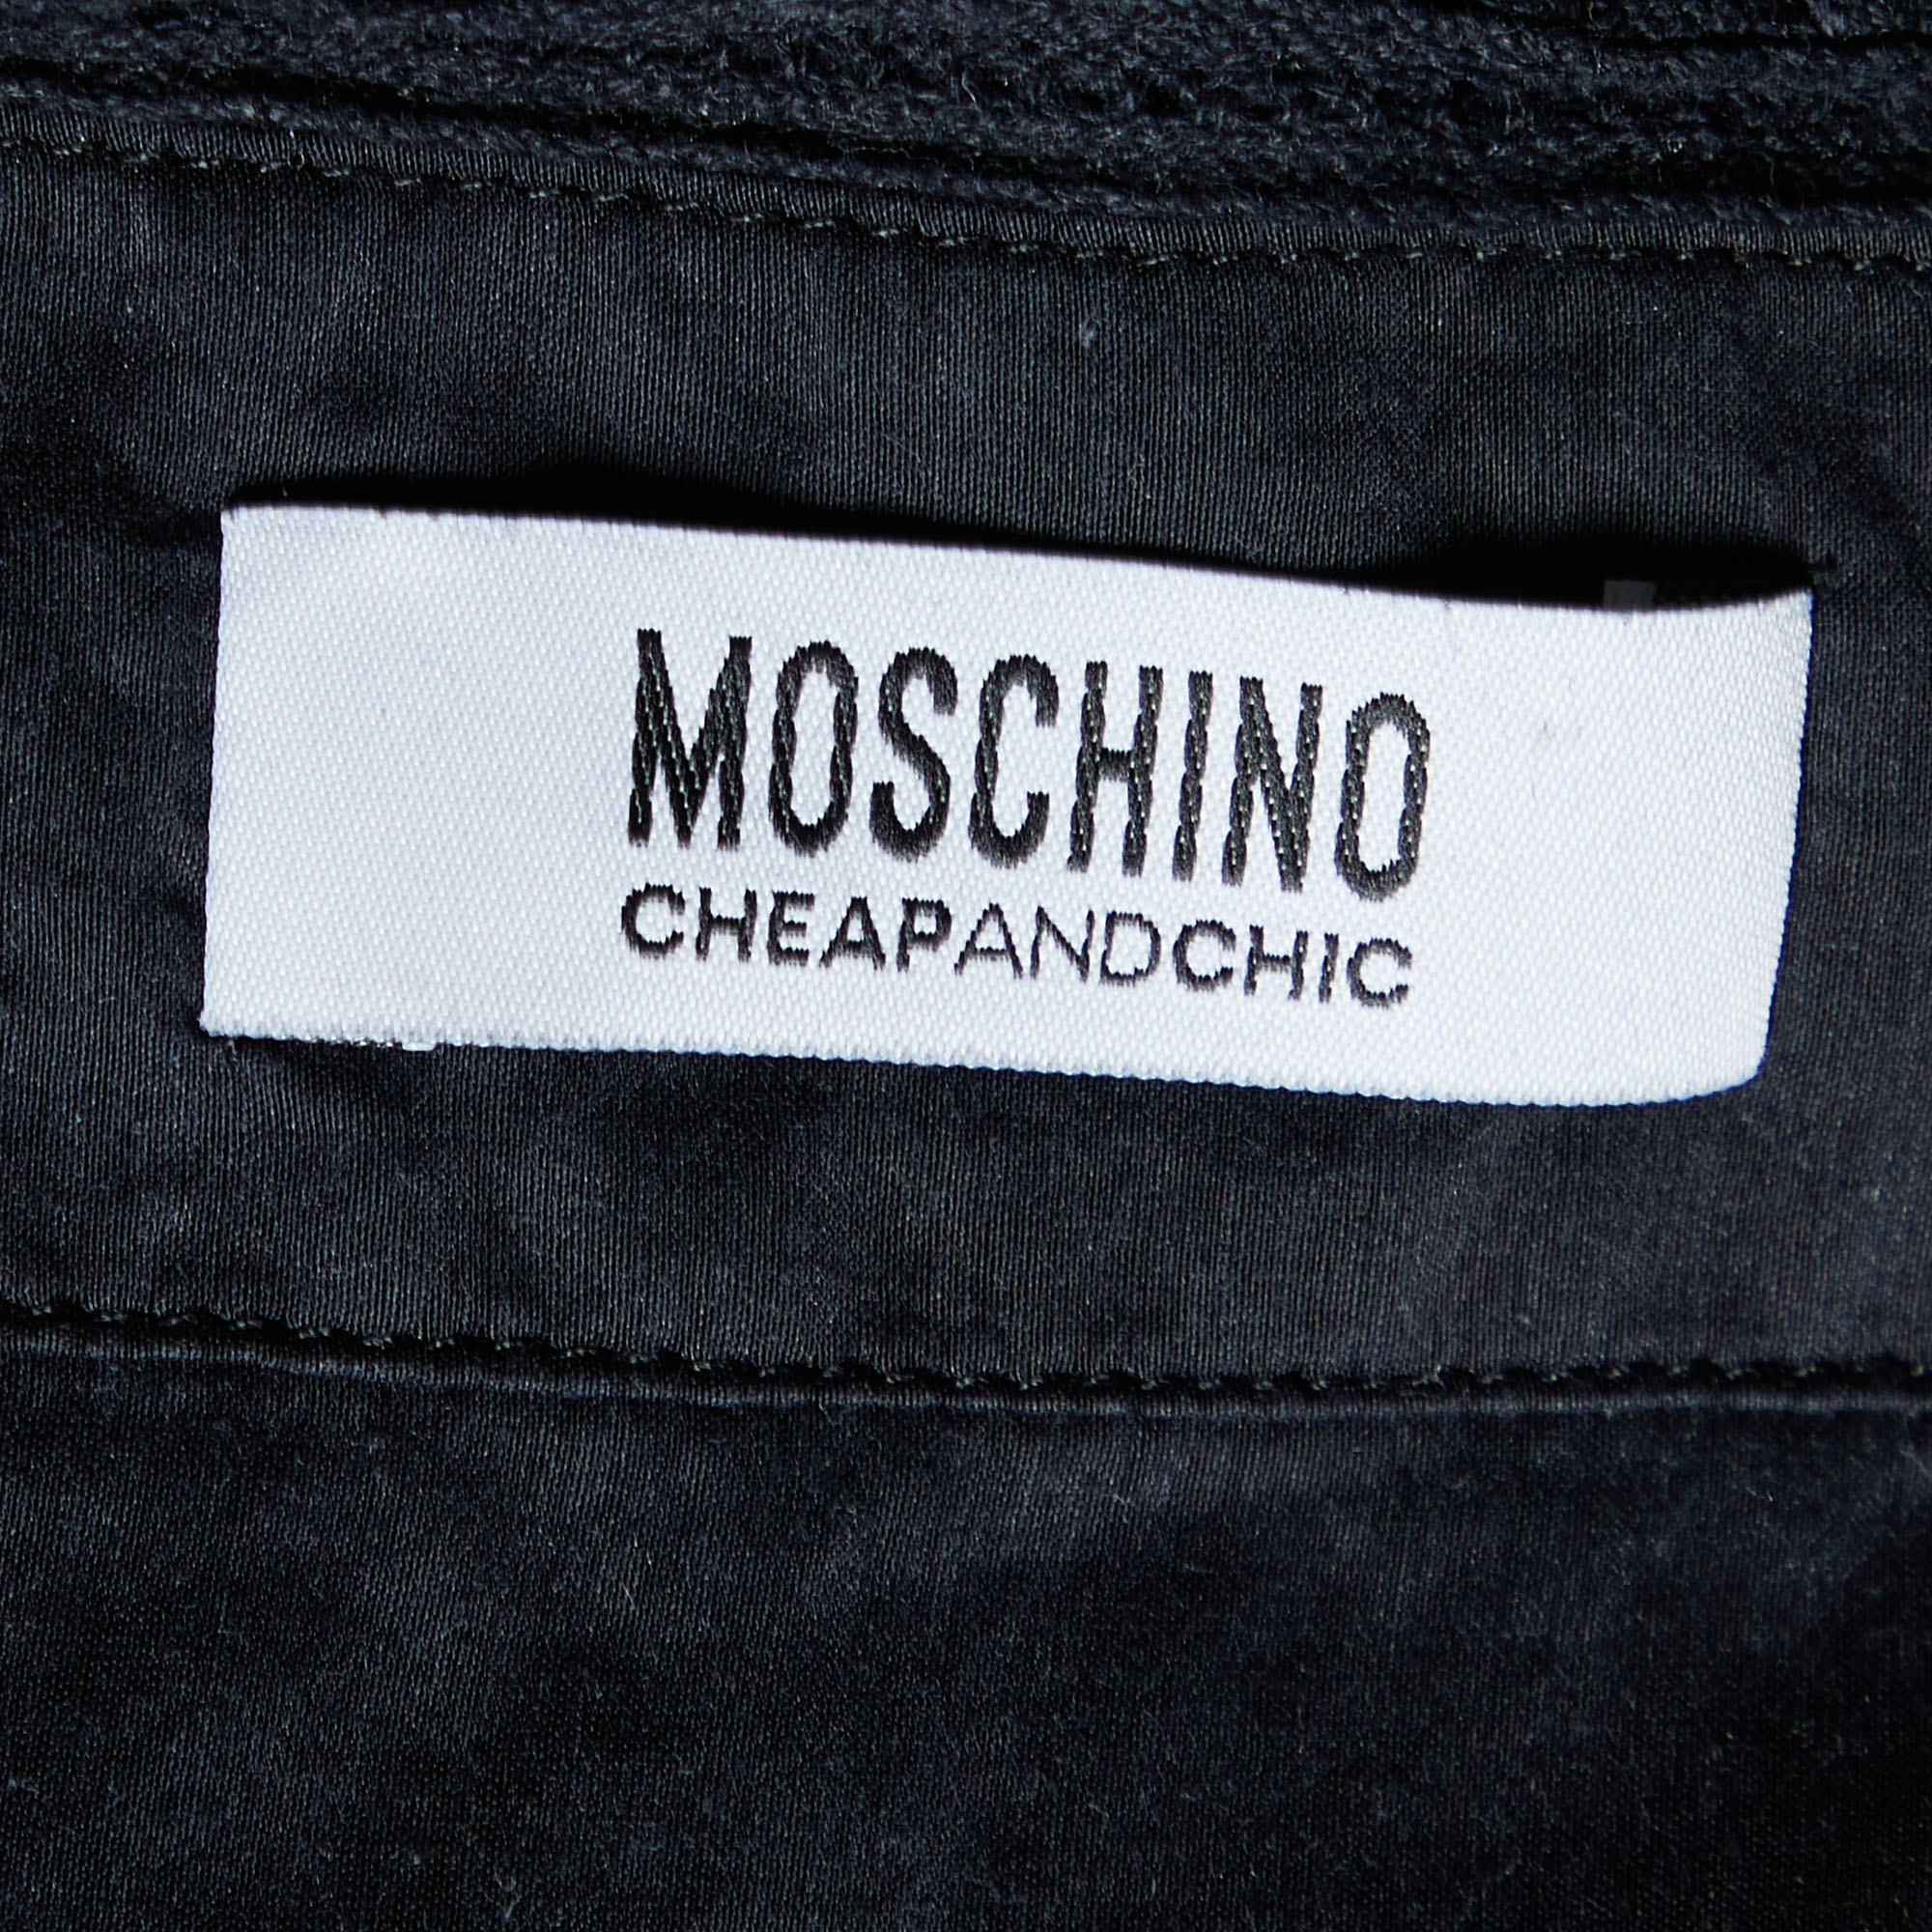 Moschino Cheap & Chic Black Cotton & Silk Lace Hem Sleeveless Top S